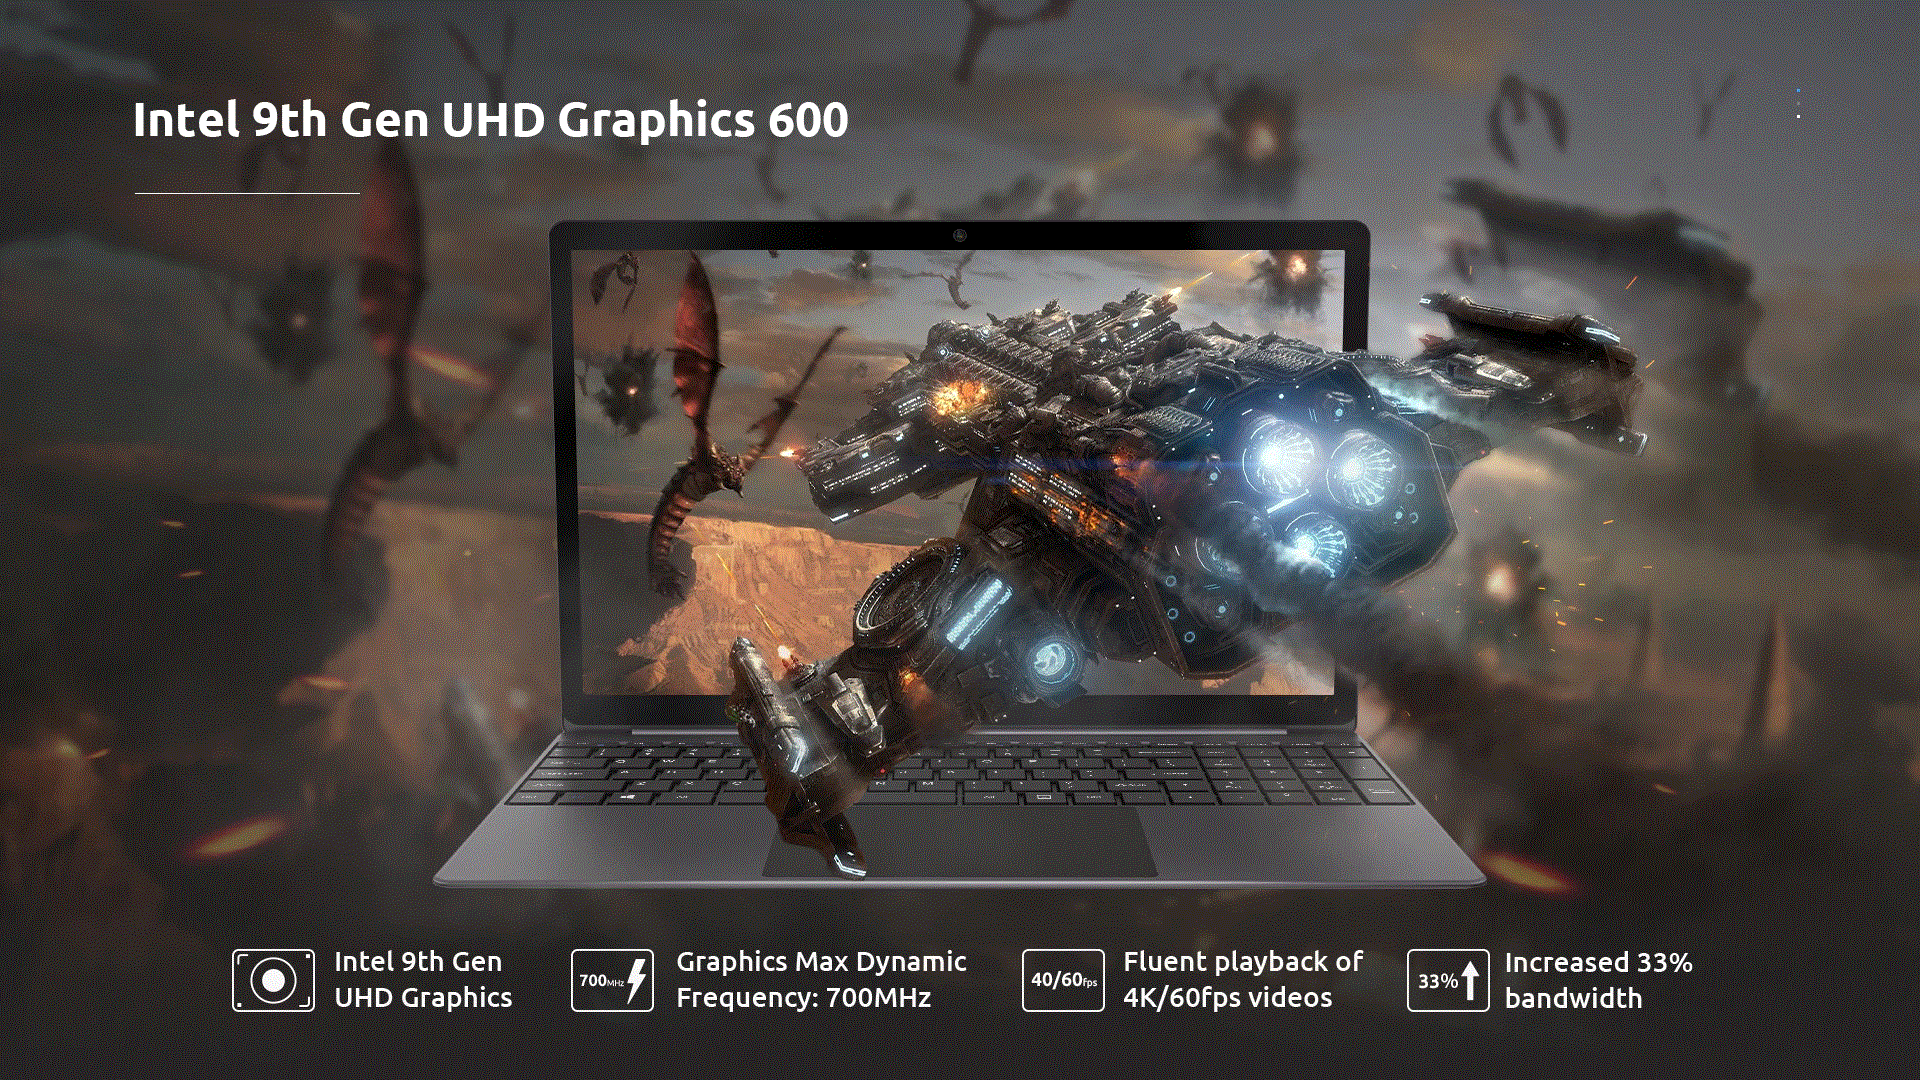 BMAX X15 Laptop - 15.6 Inch, Intel Gemini Lake N4100, 8GB RAM, 128GB SSD, Intel UHD Graphics 600 - dealskart.com.au